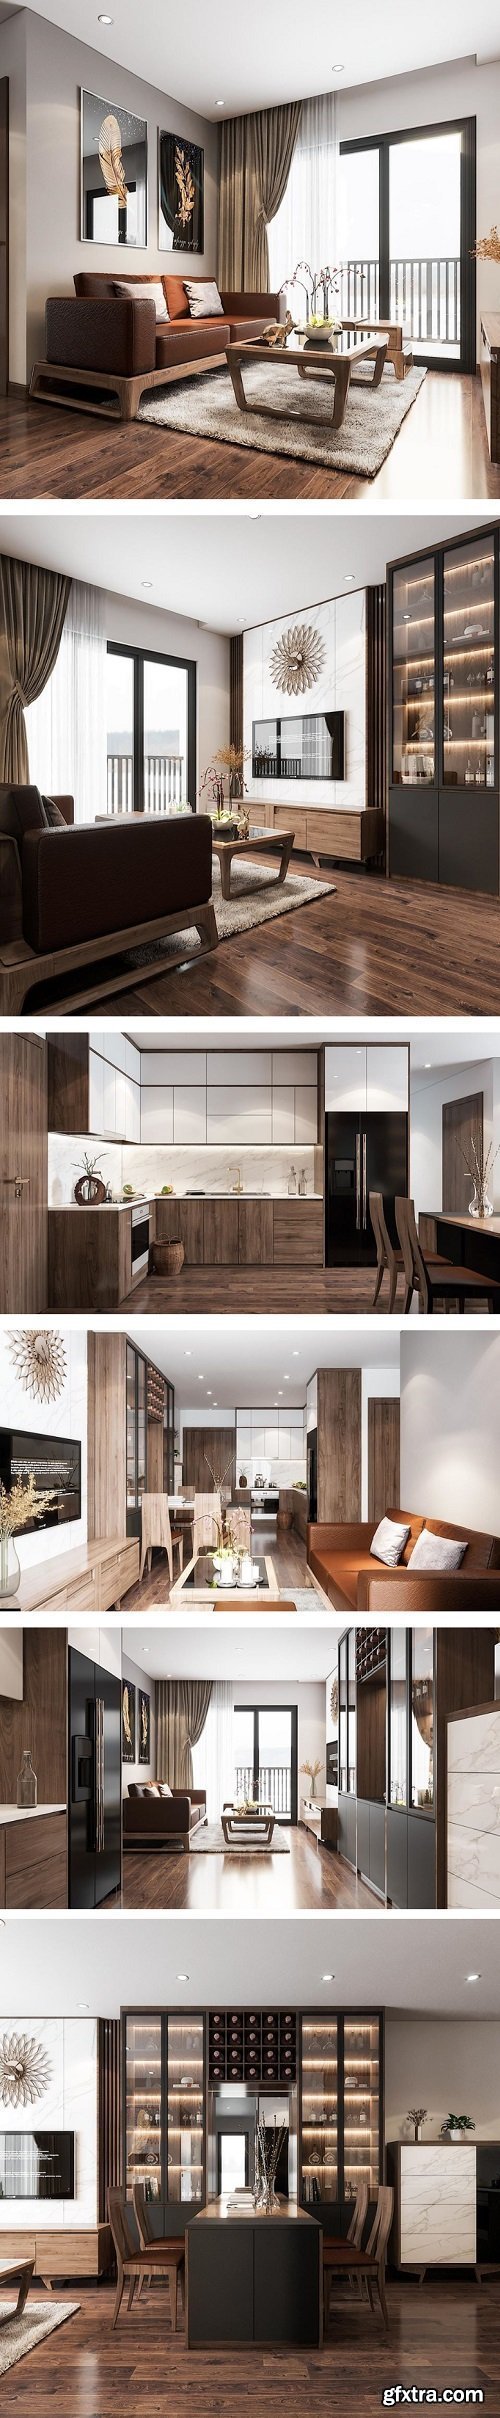 Kitchen - Livingroom Scene By TungNguyen